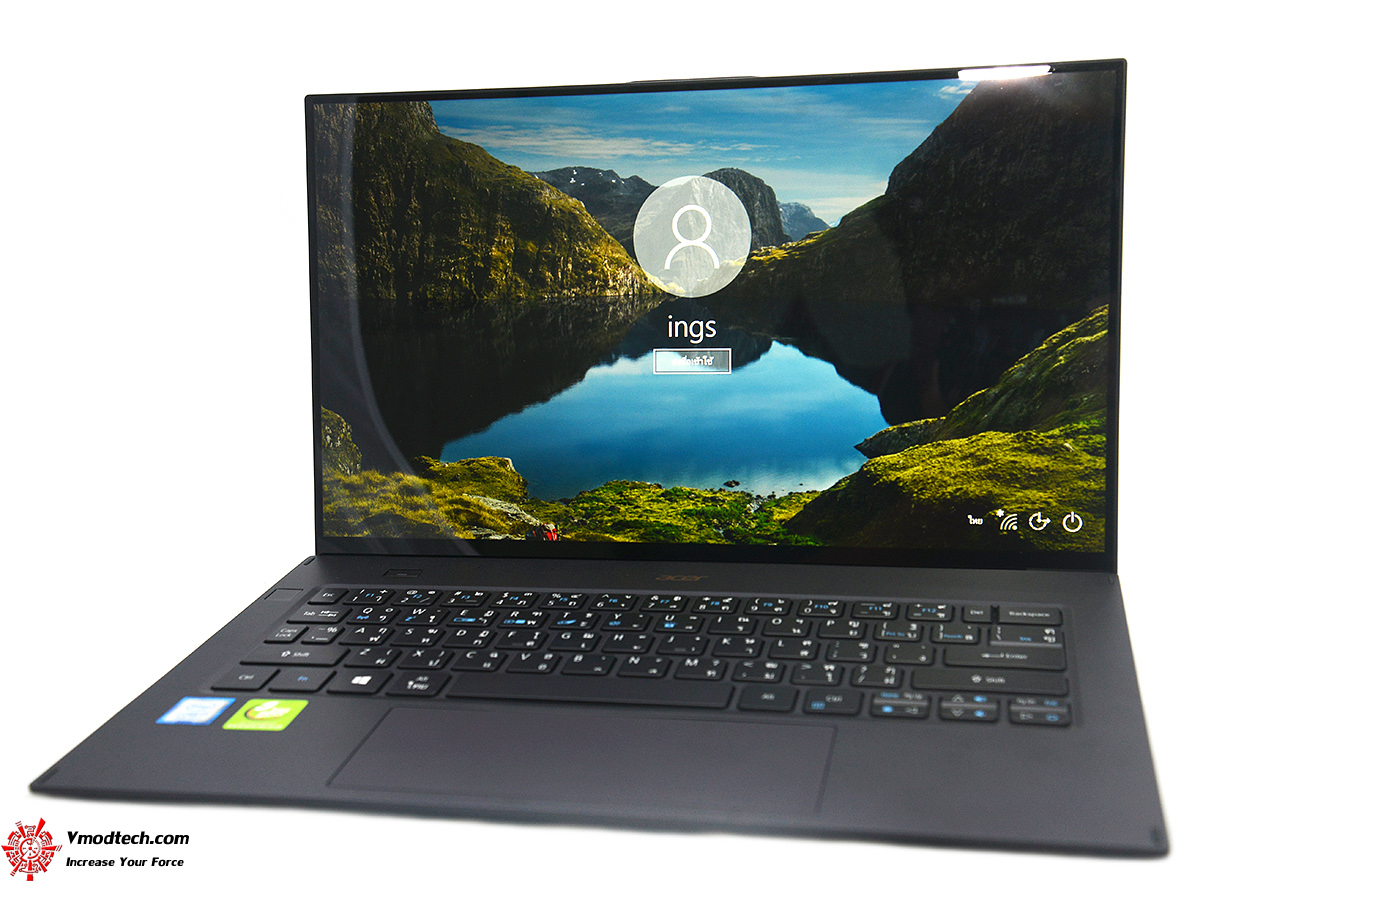 dsc 0164 Acer Swift 7 2019 Review